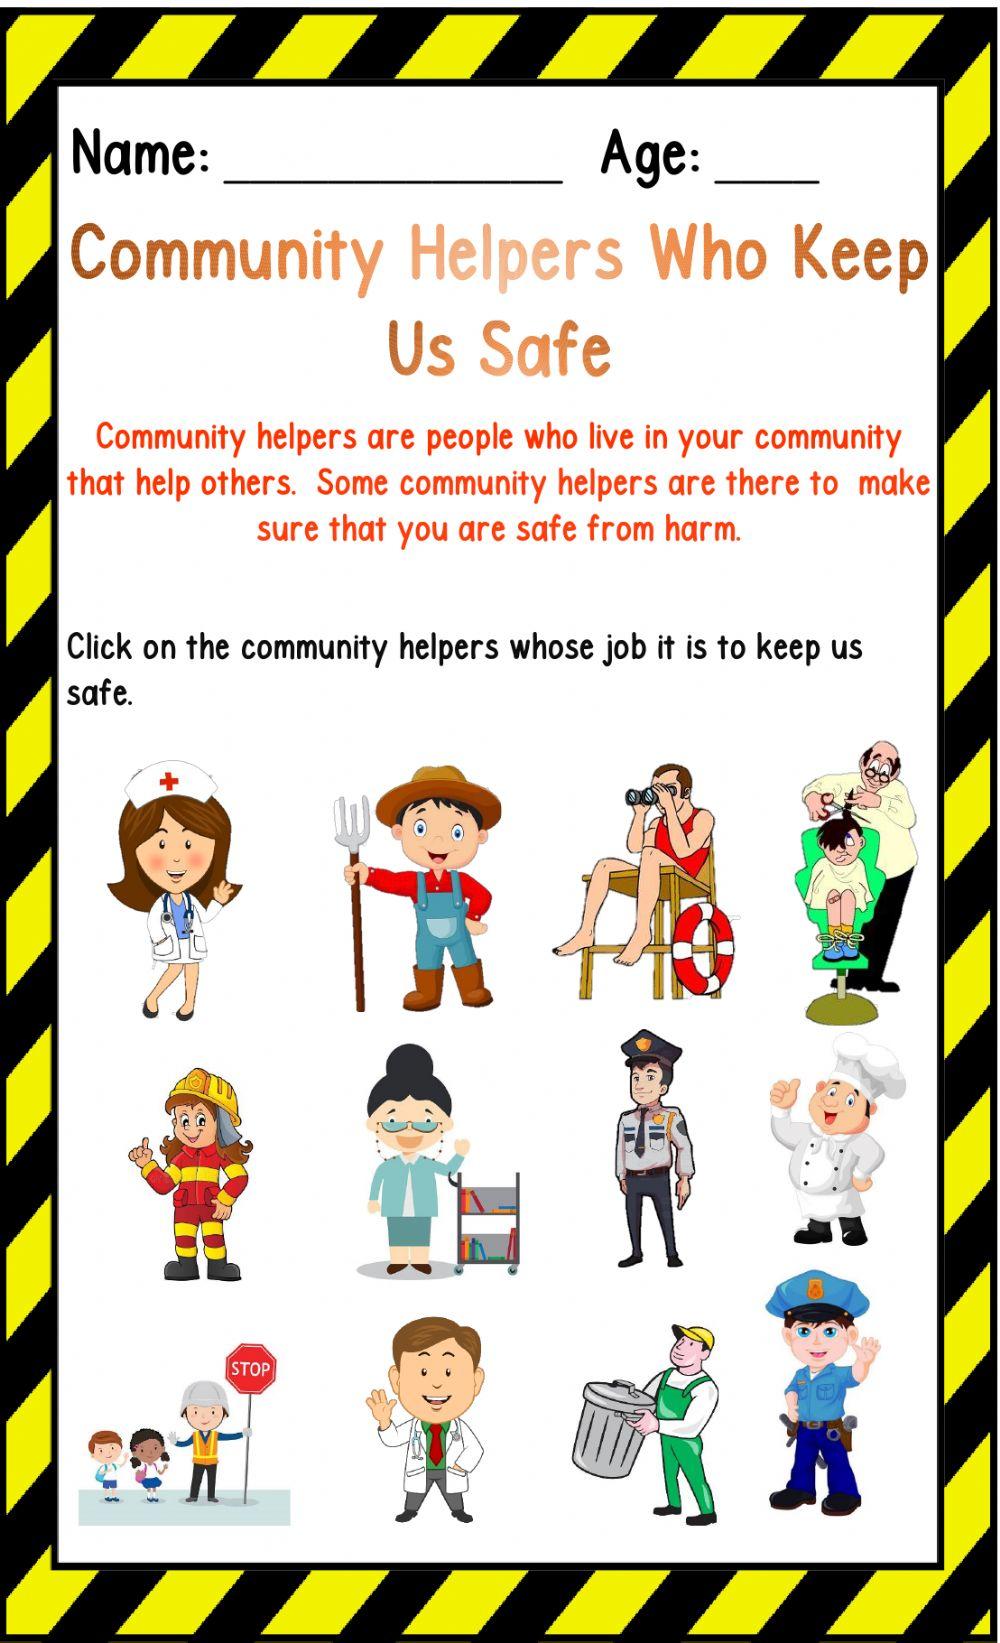 Community Helpers who keep us safe